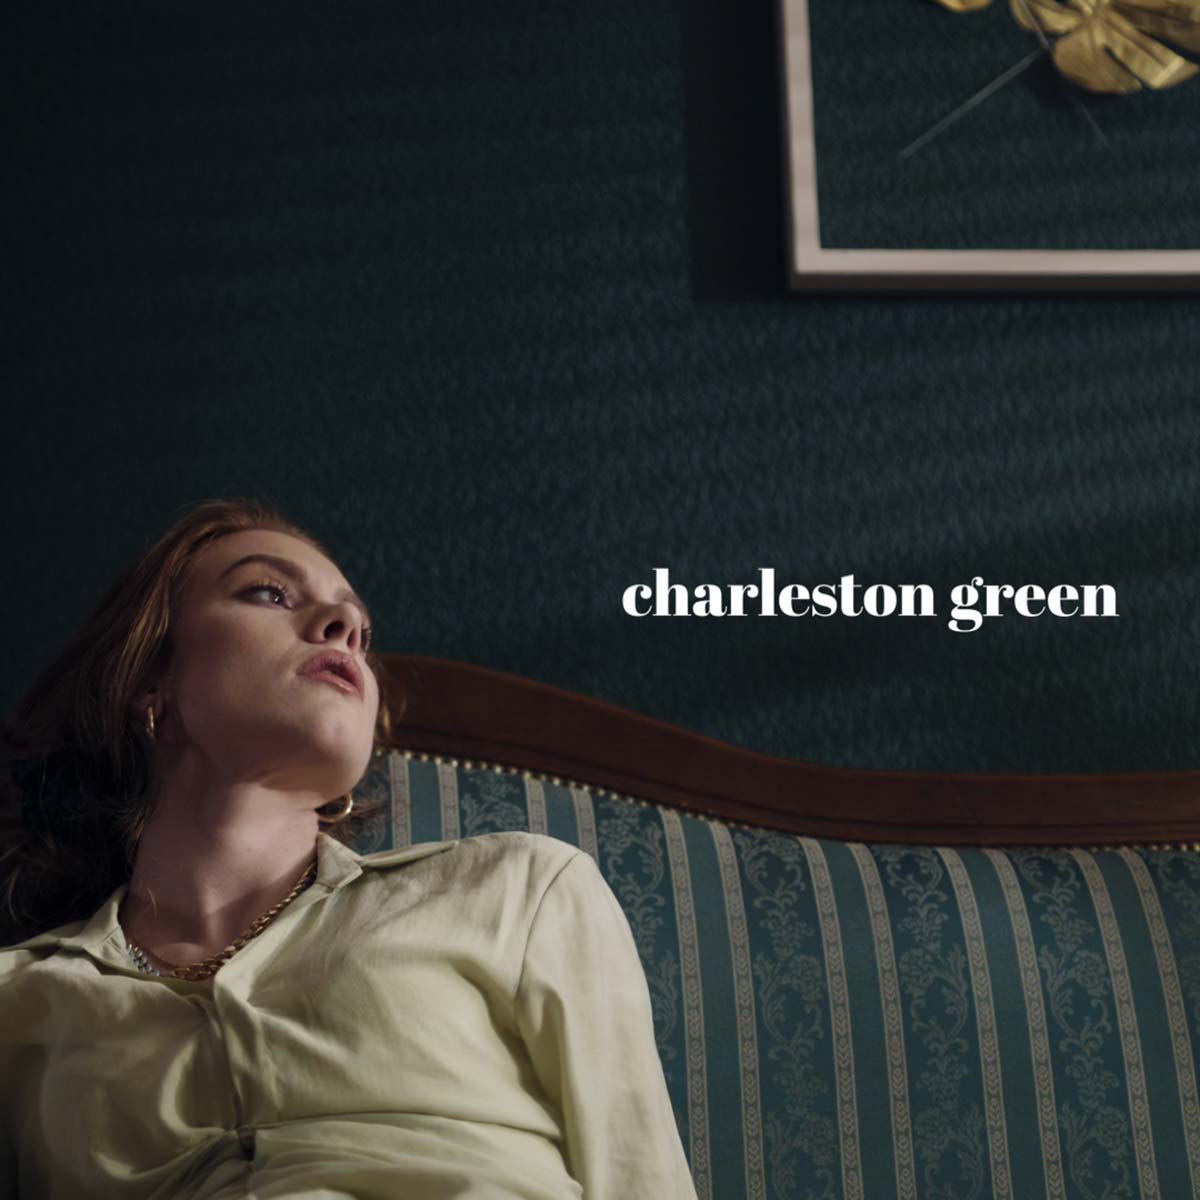 Charleston green by Tonester